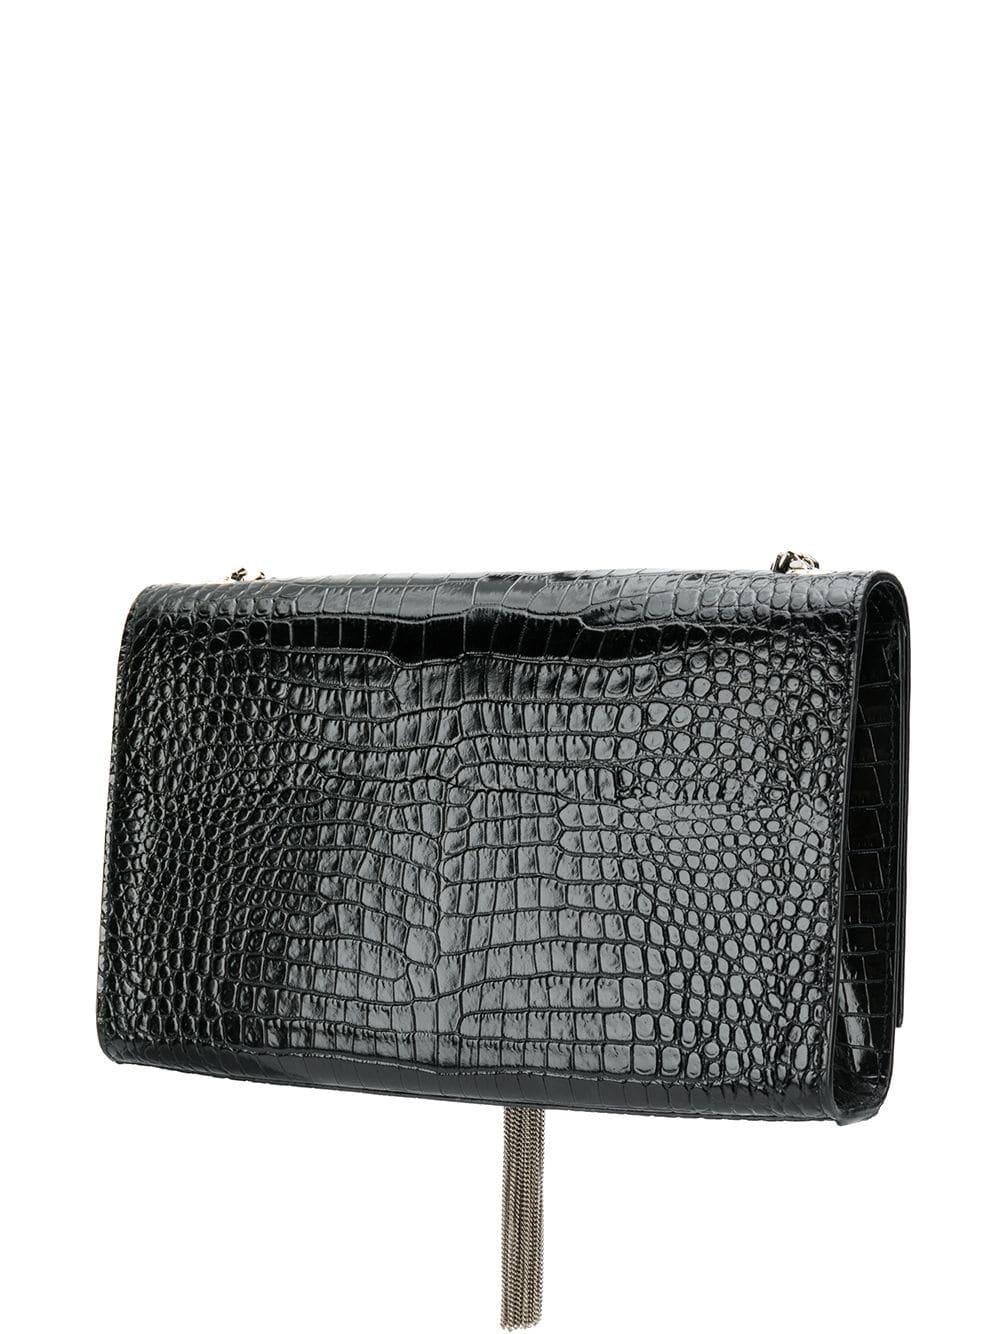 Black Yves Saint Laurent Medium Leather Kate Bag